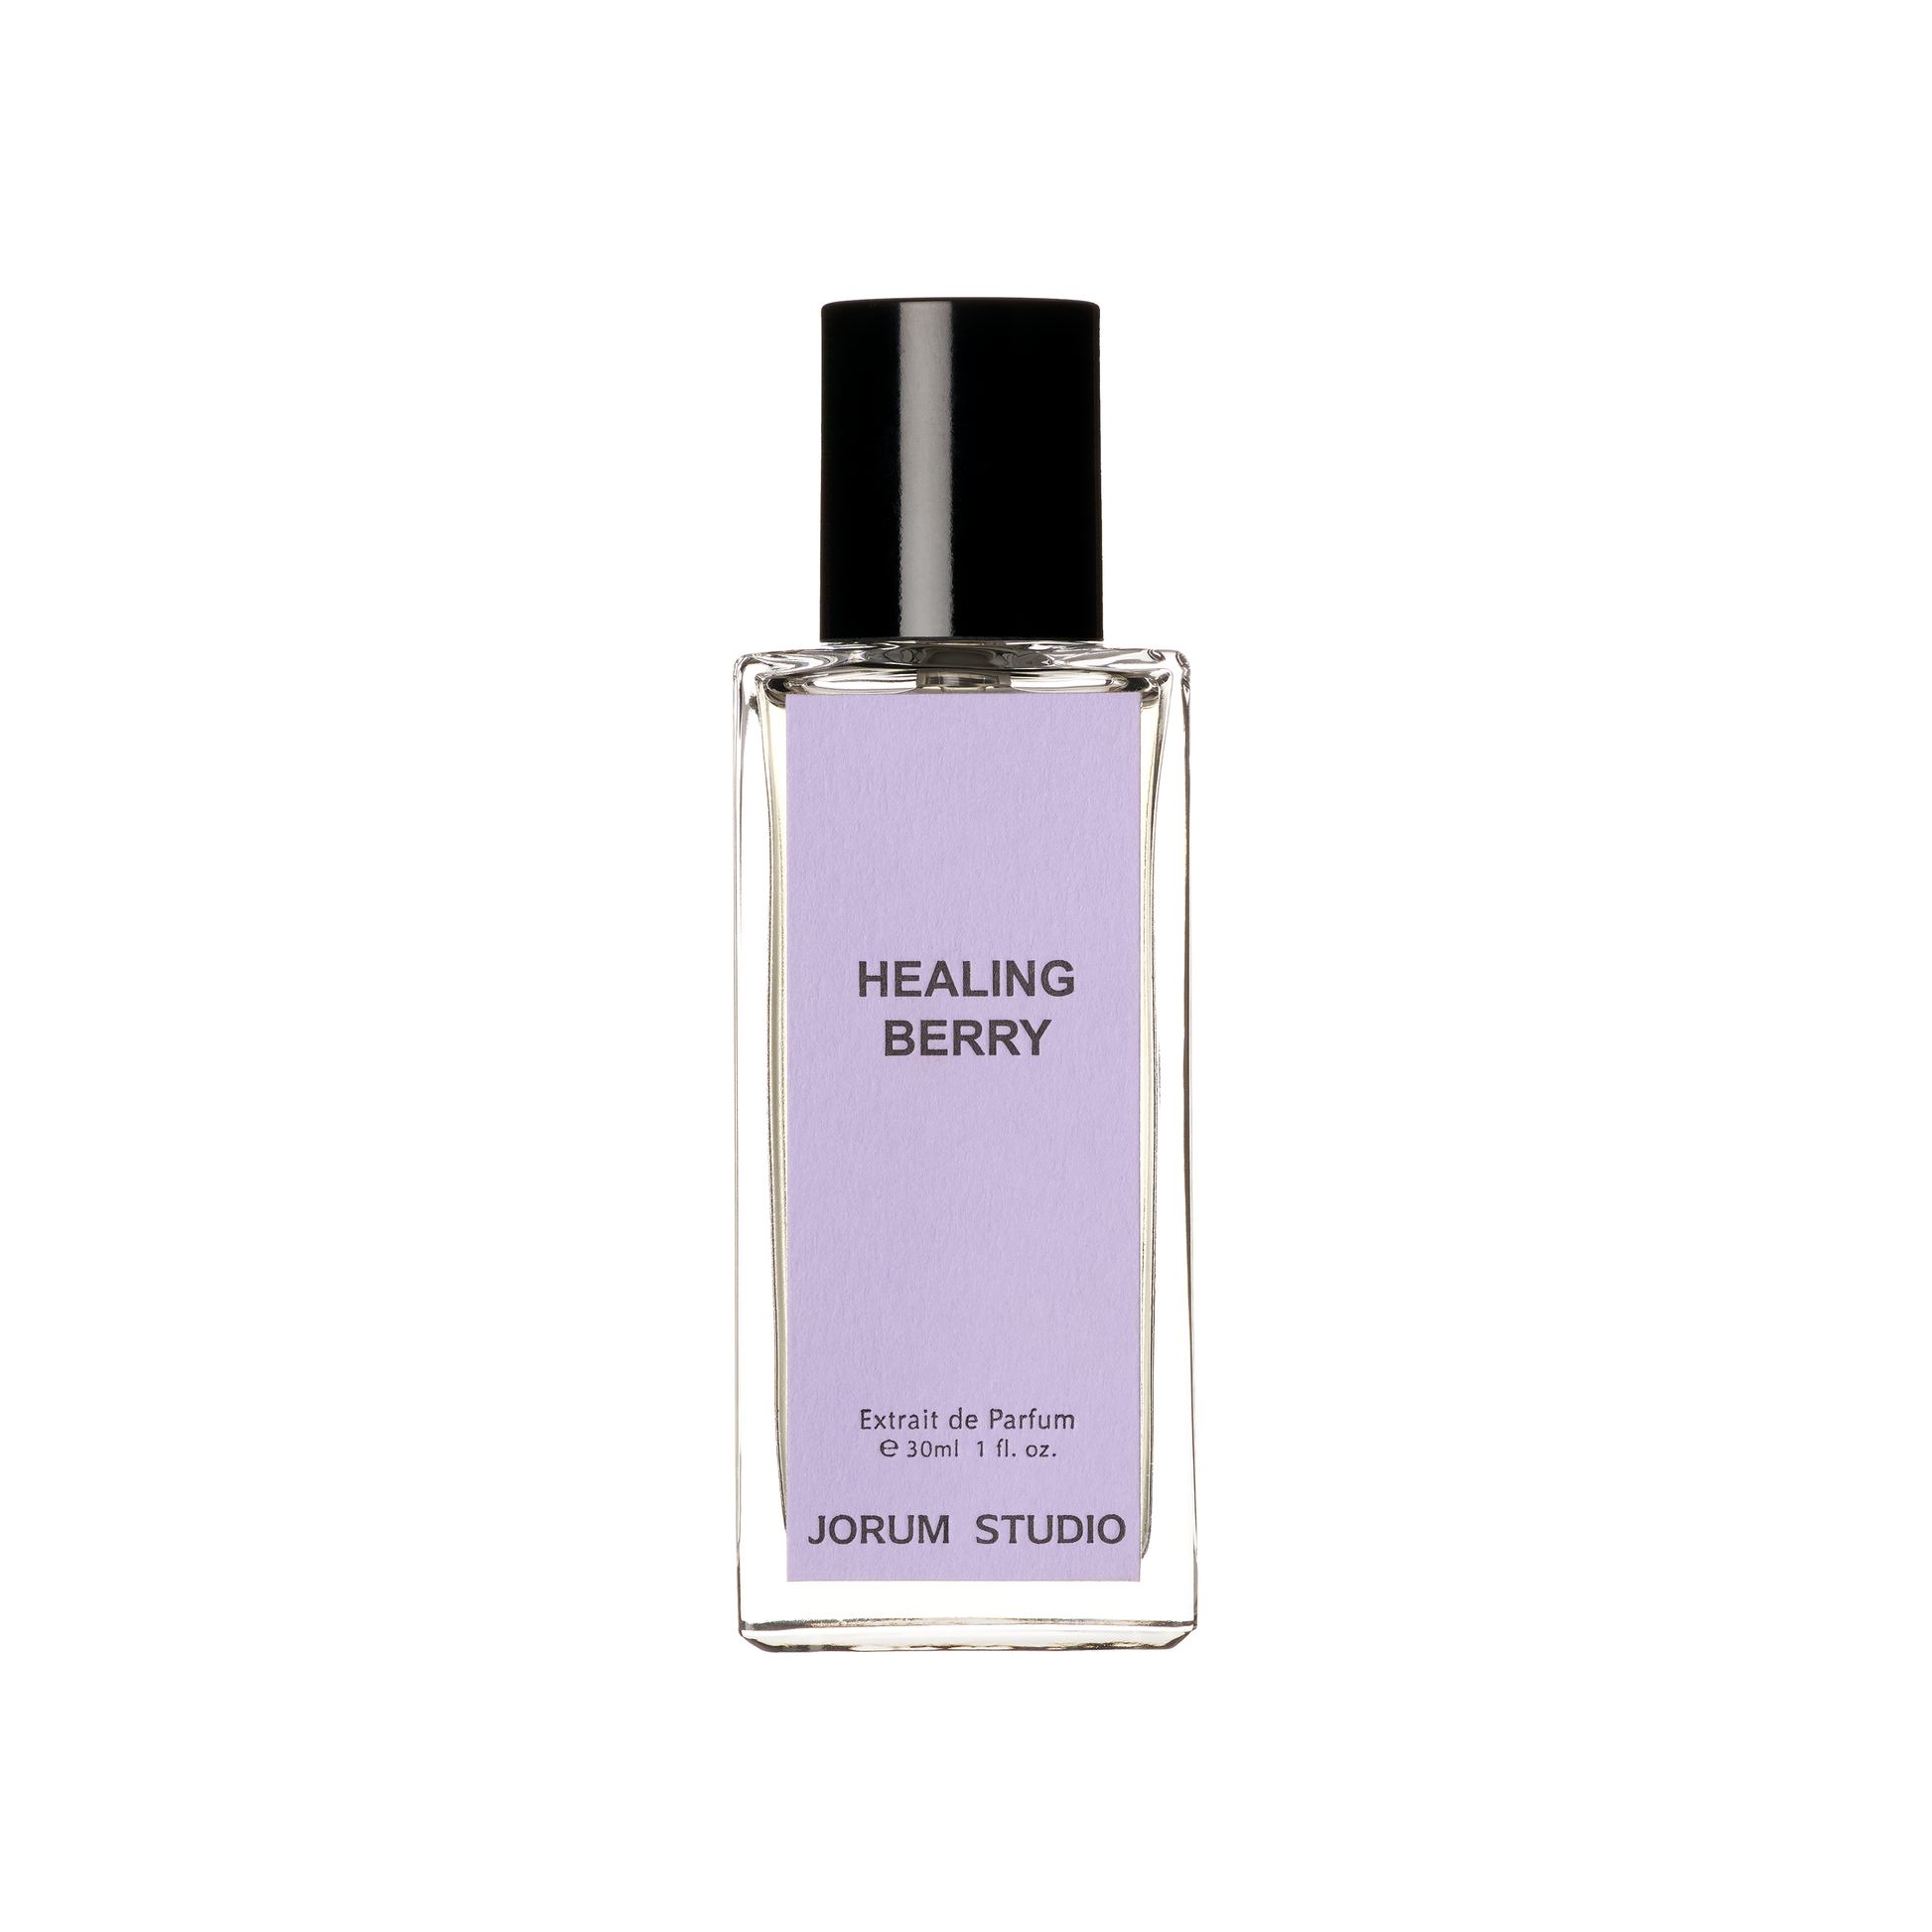 30ml bottle of Healing Berry Extrait de Parfum by independent Scottish perfumers Jorum Studio, the bottle has a lilac label